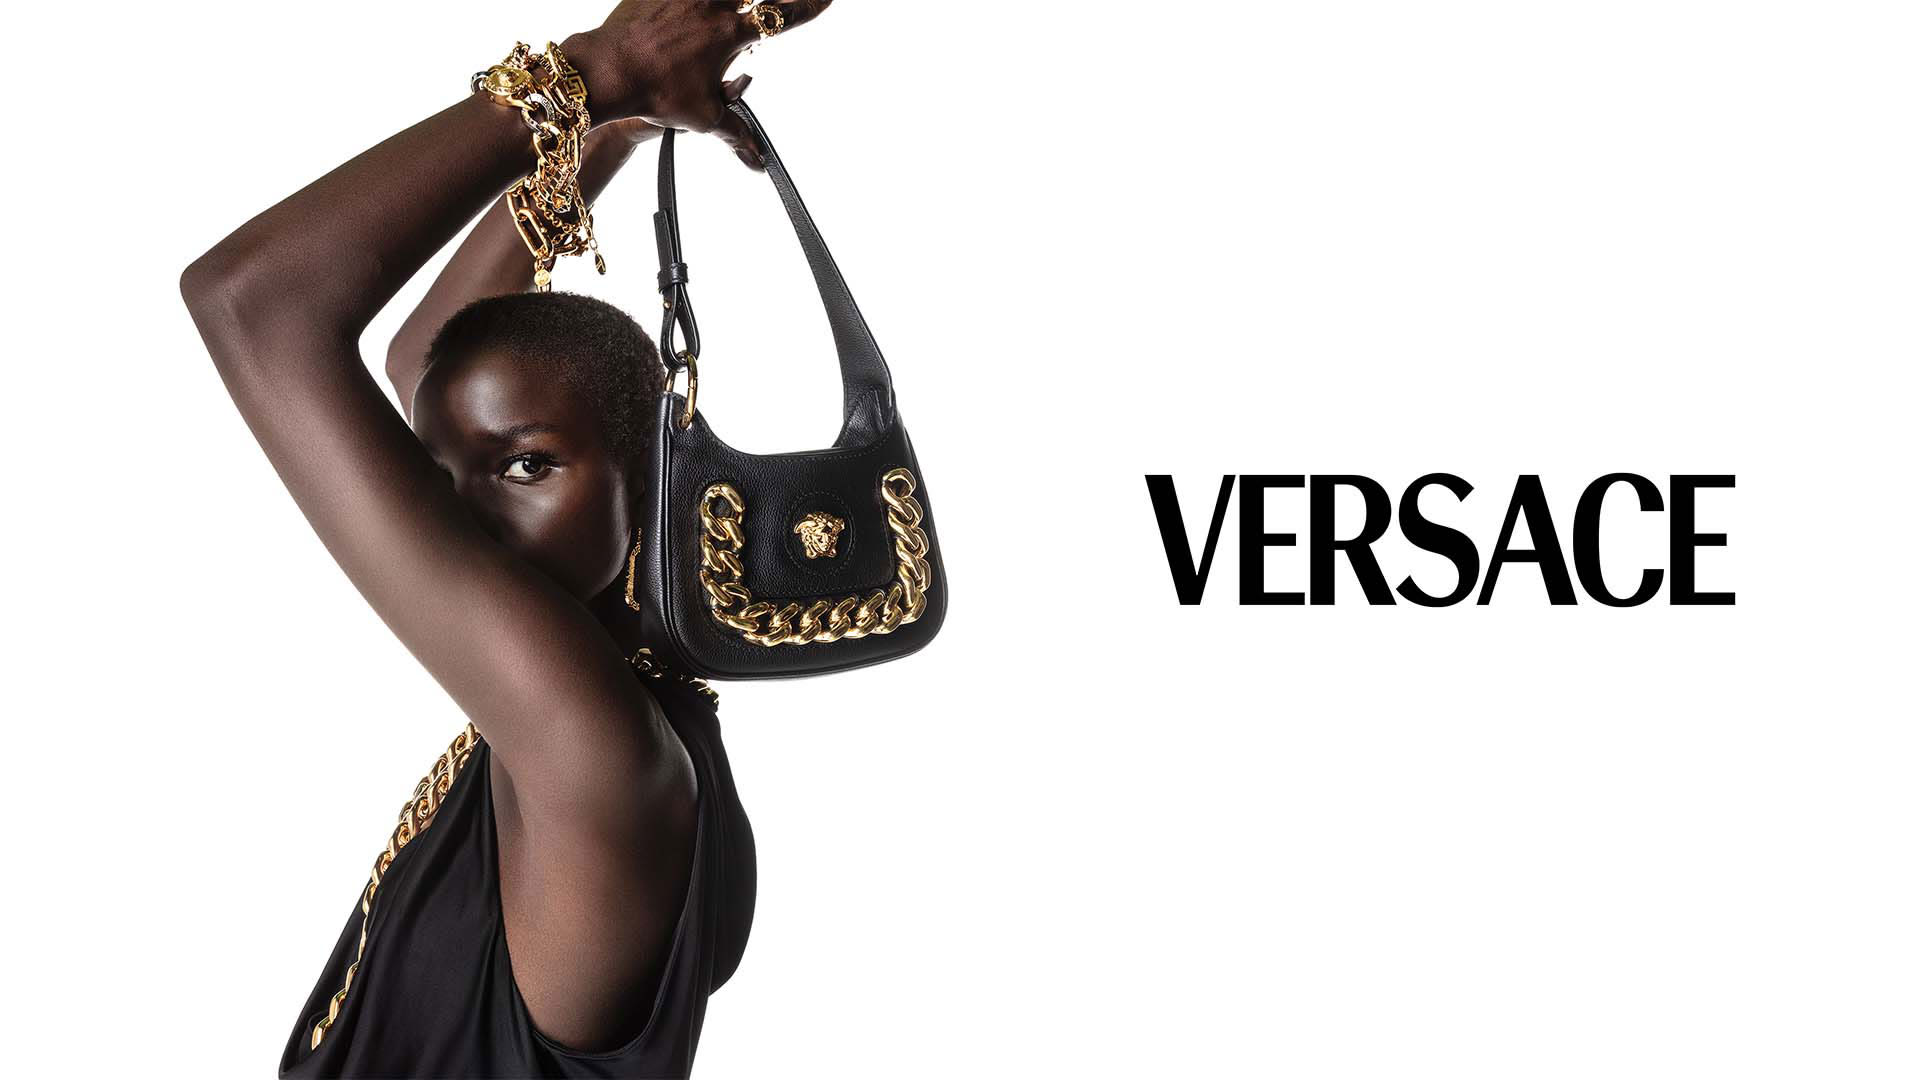 Versace Brand Image